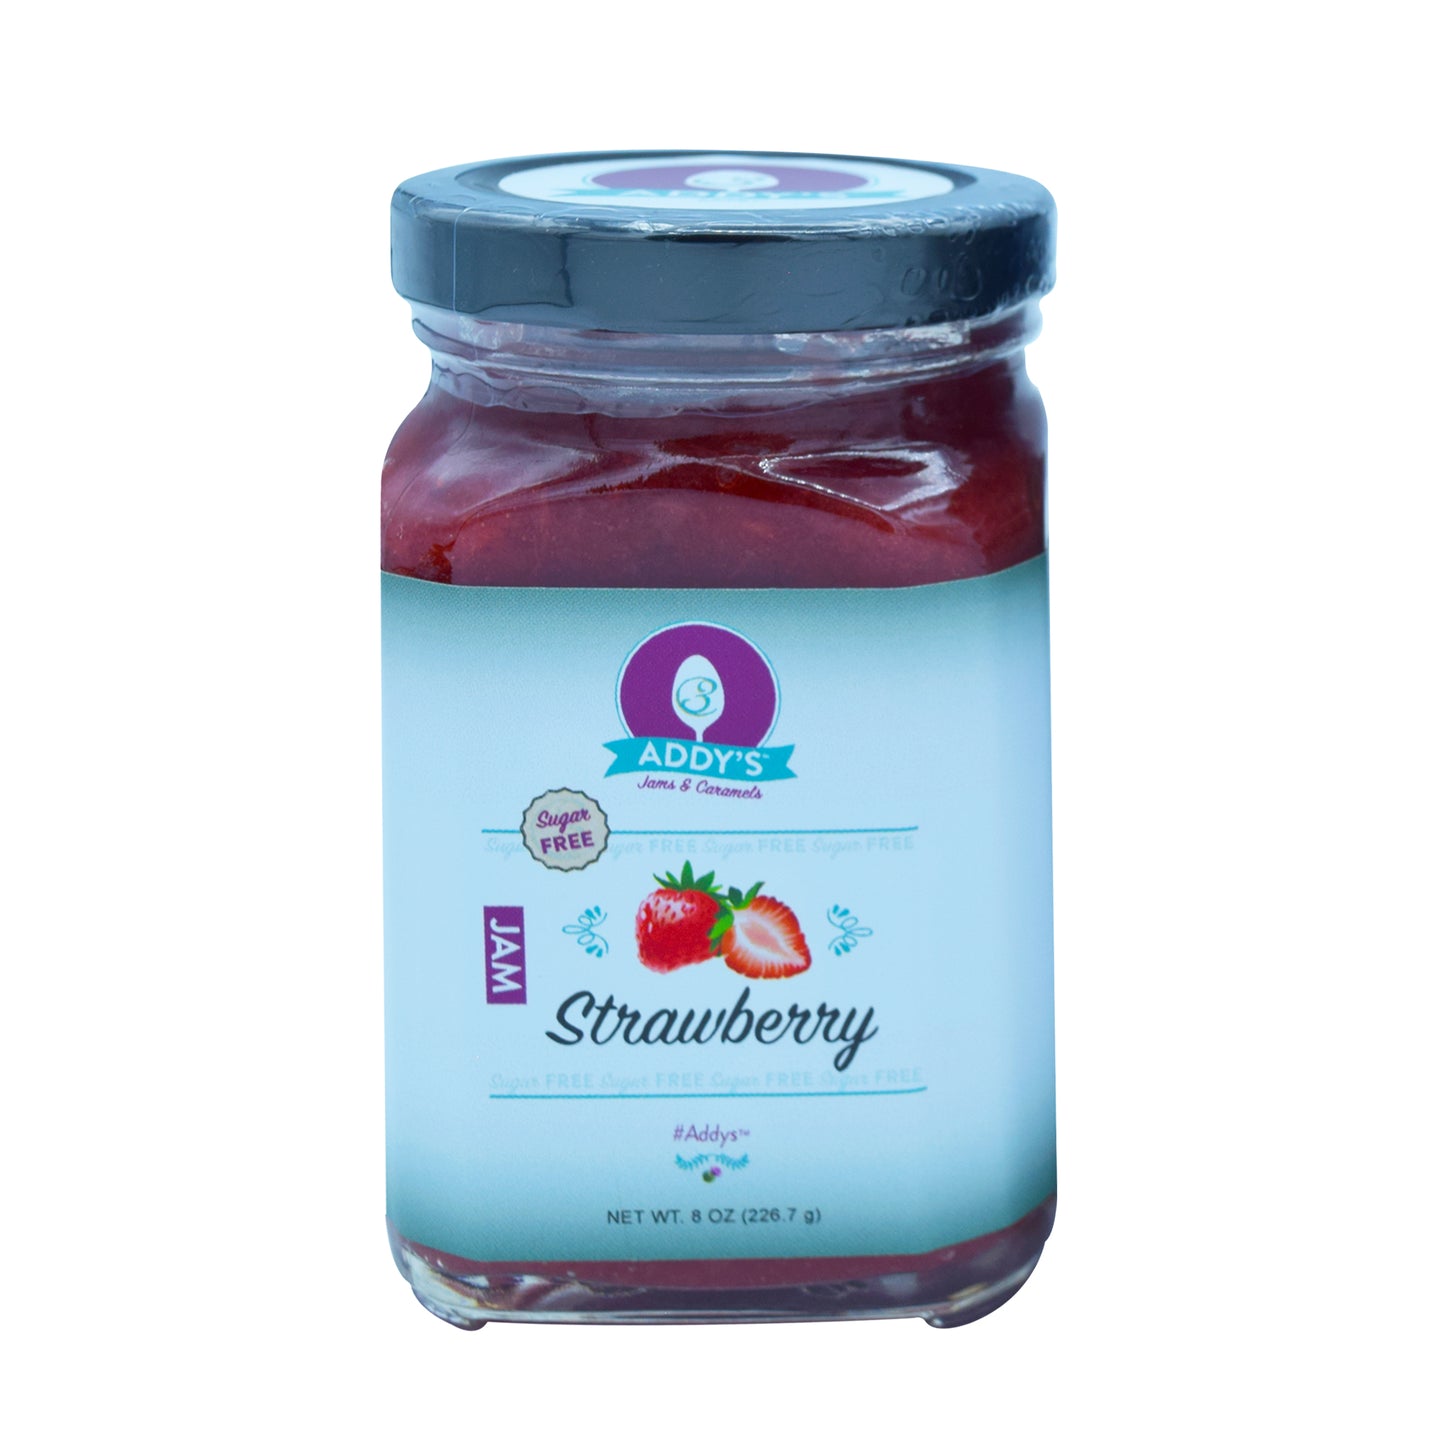 Addy’s Sugar Free Strawberry Jam